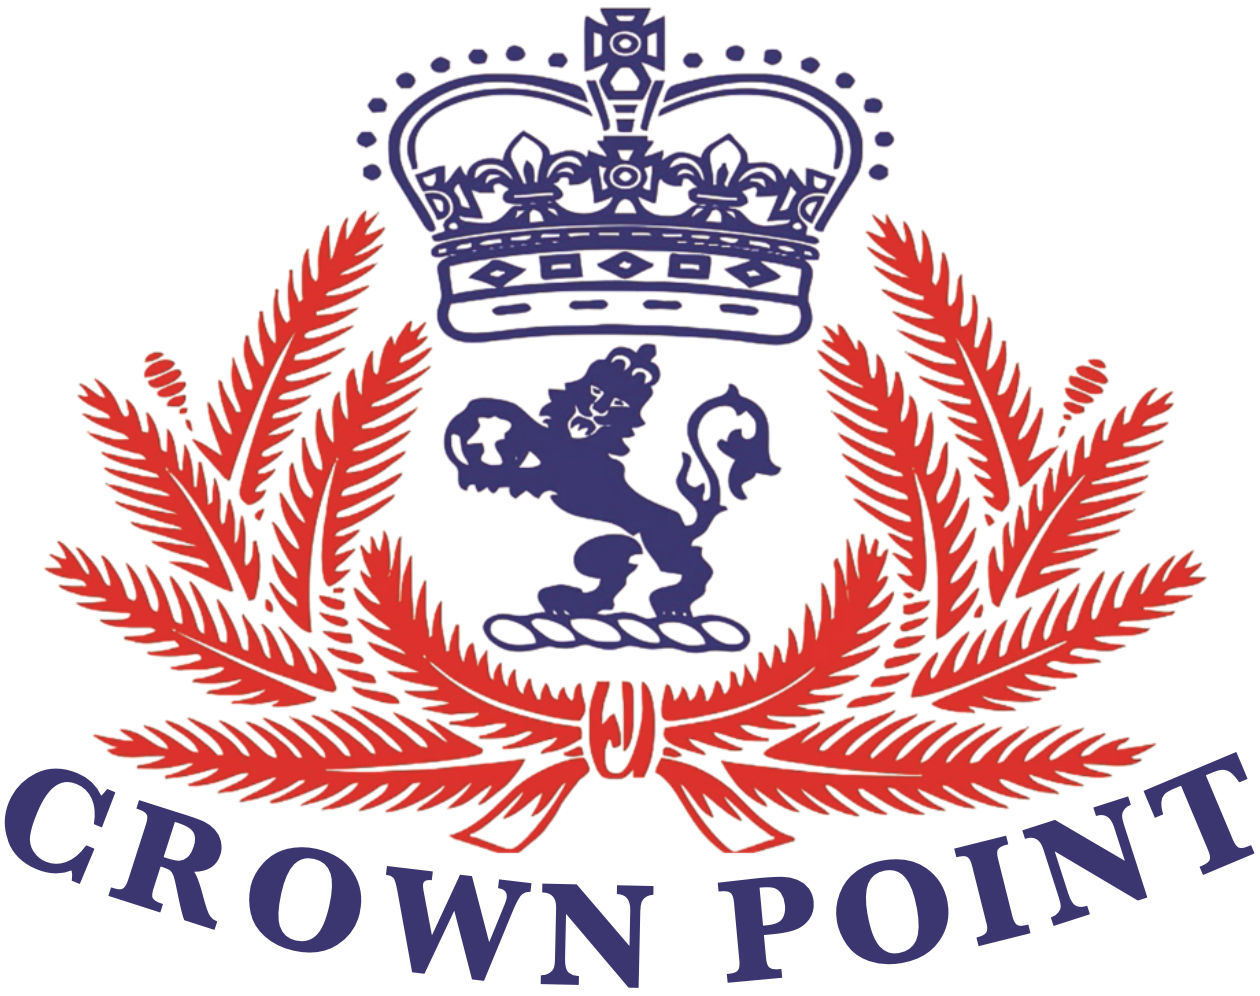 Crown Point Auto & Body Repair Shop